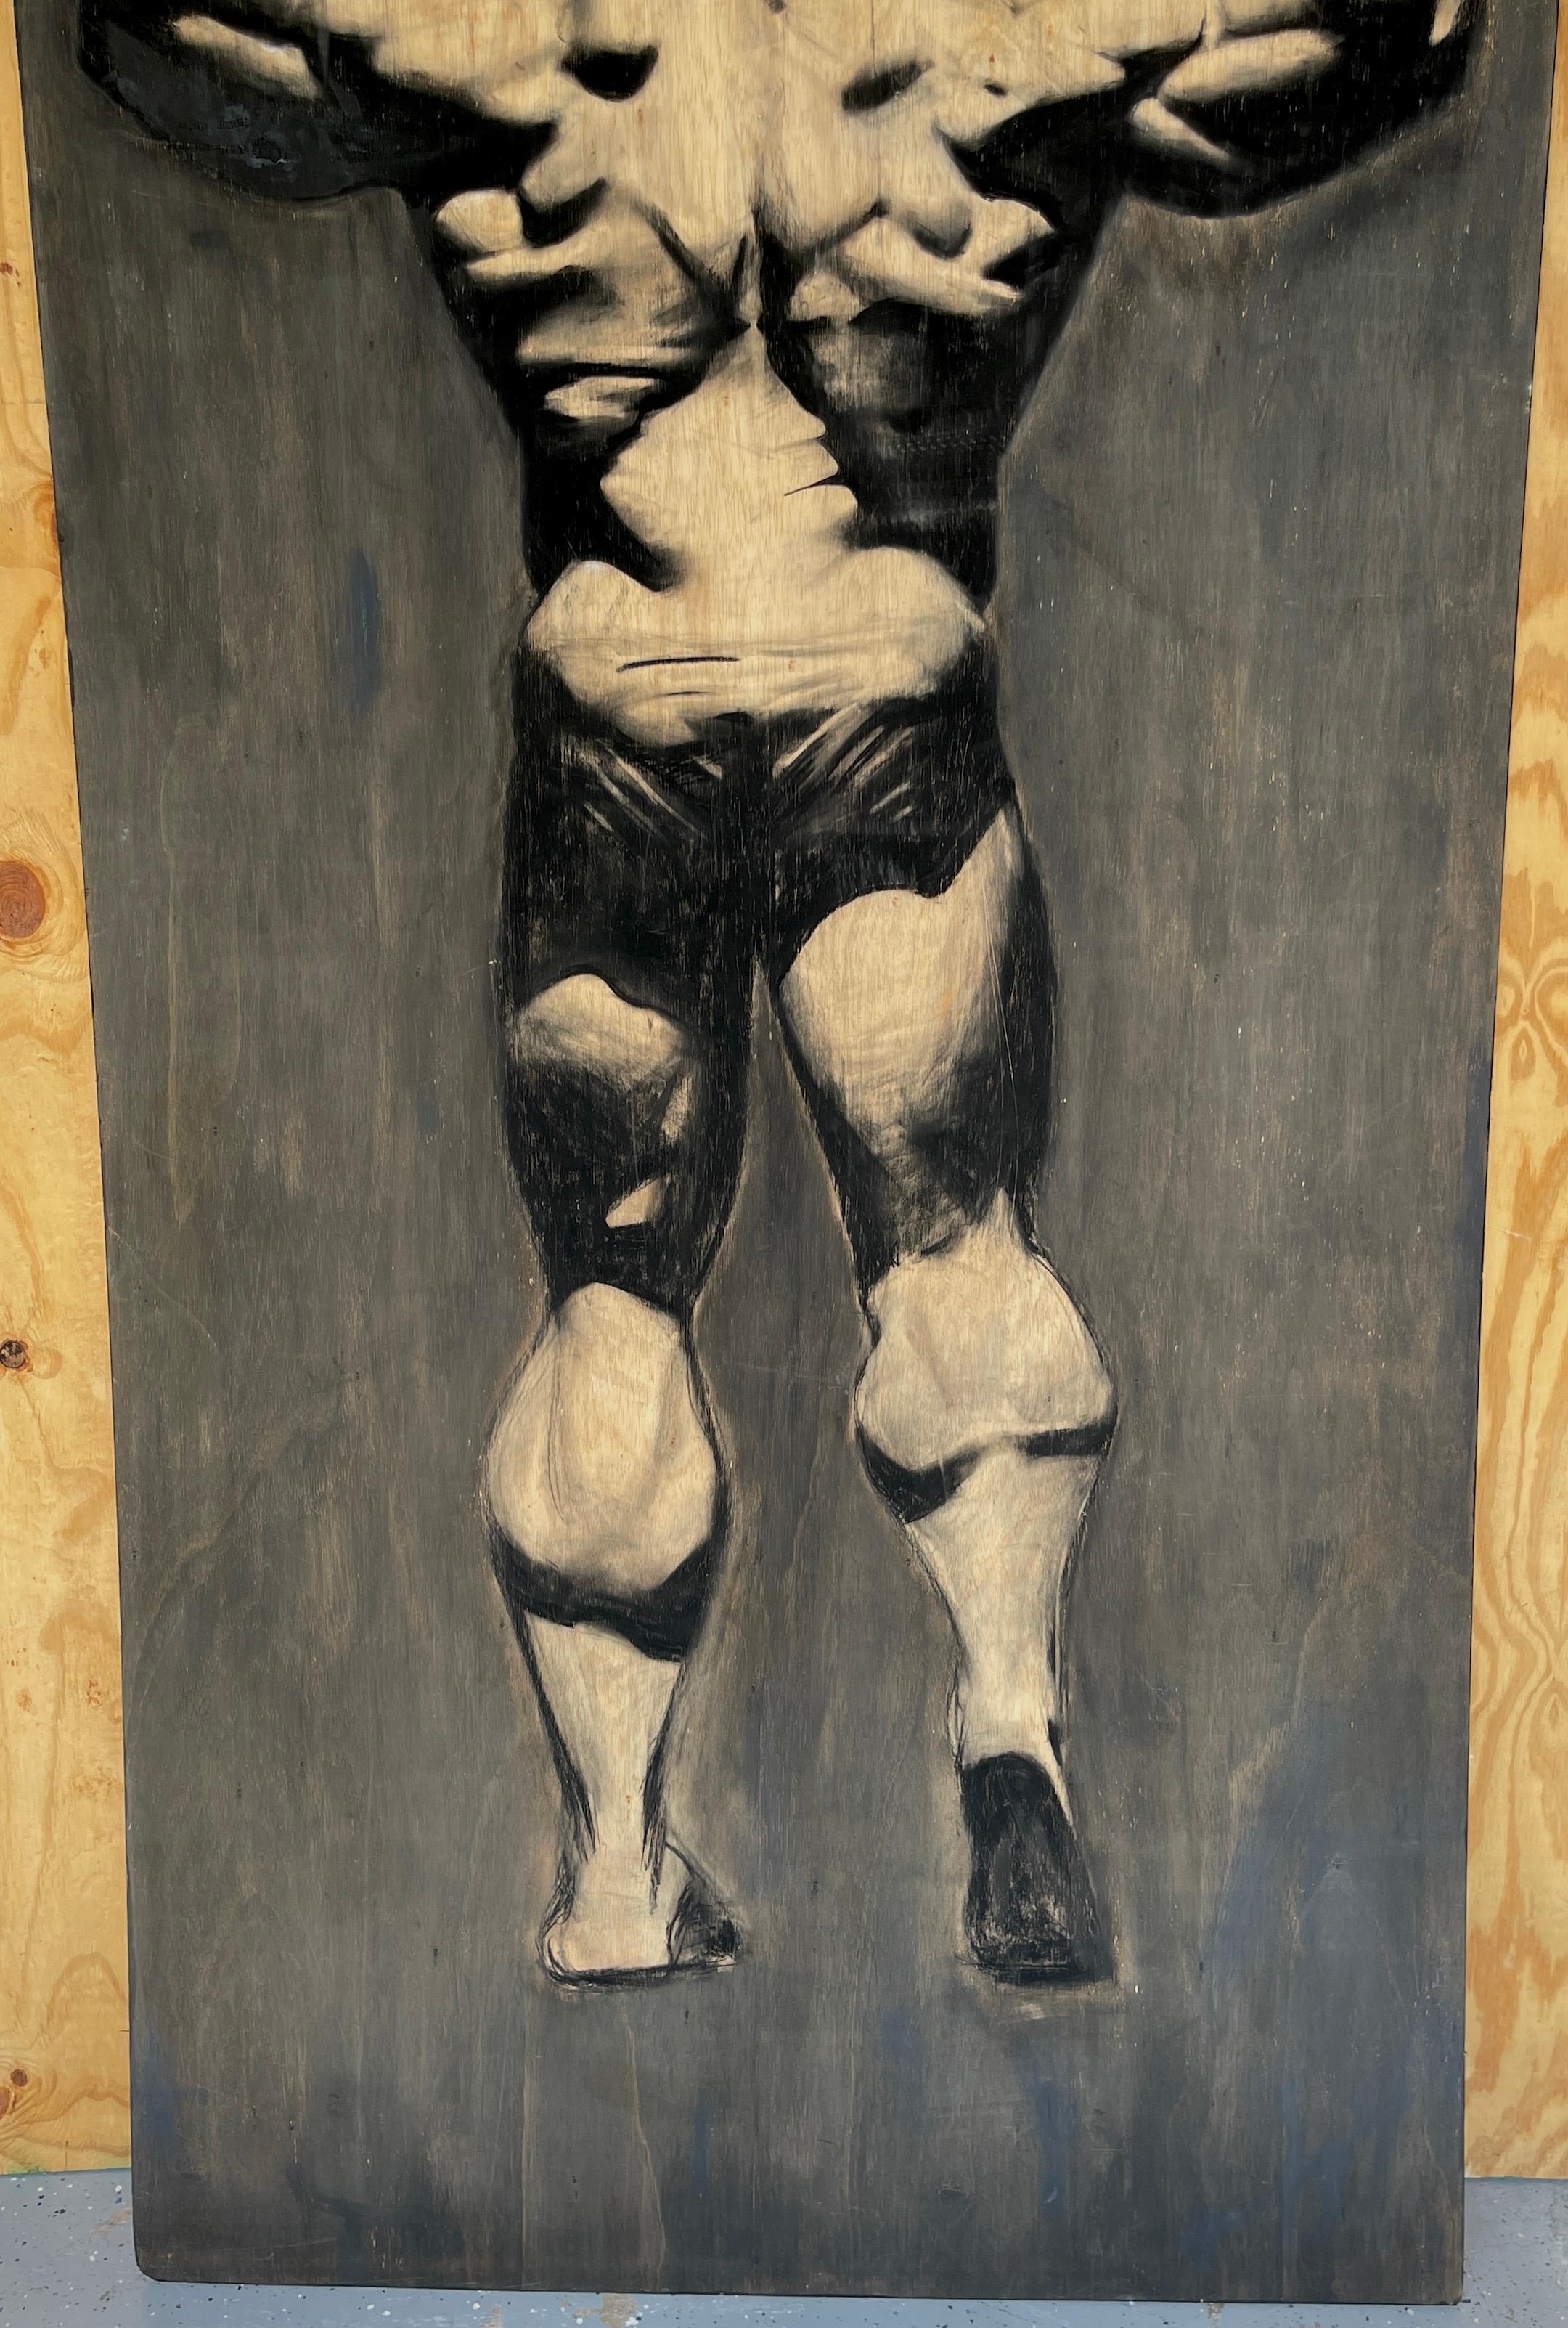 20th Century Massive Black & White Painting of Arnold Schwarzenegger's 'Back Double Biceps' For Sale